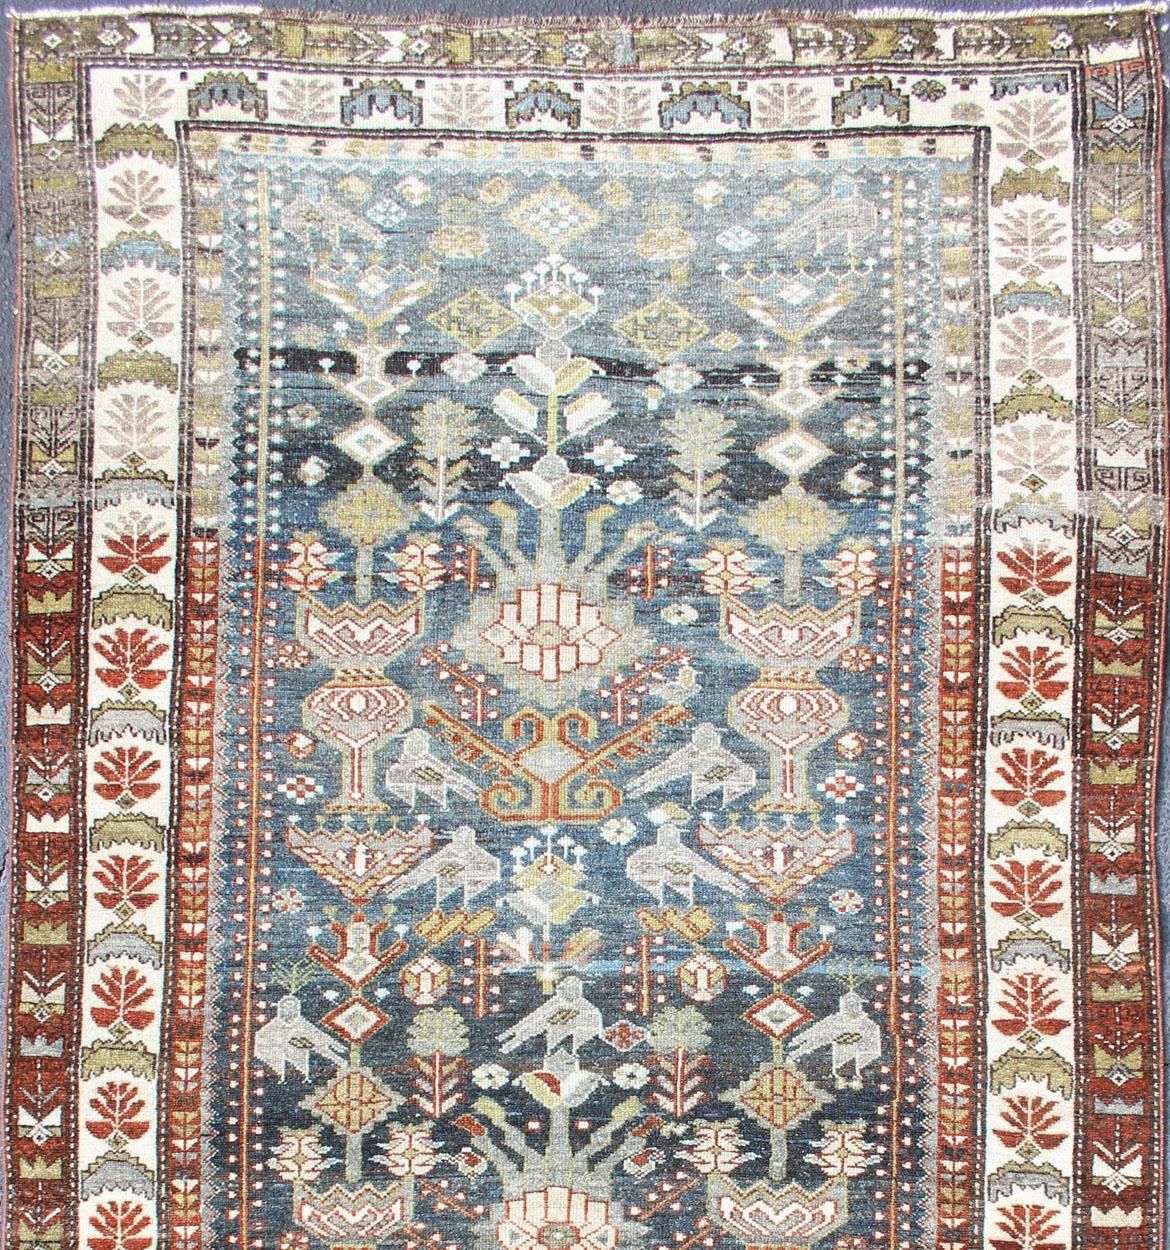 All-over Persian Earth antique Bakhtiari rug
Geometric motifs and design Bakhtiari rug in steel blue and grayish-blue color tones, rug R20-0701, origin / type: Iran / Bakhtiari, circa 1930

This beautiful antique Bakhtiari rug from Persia